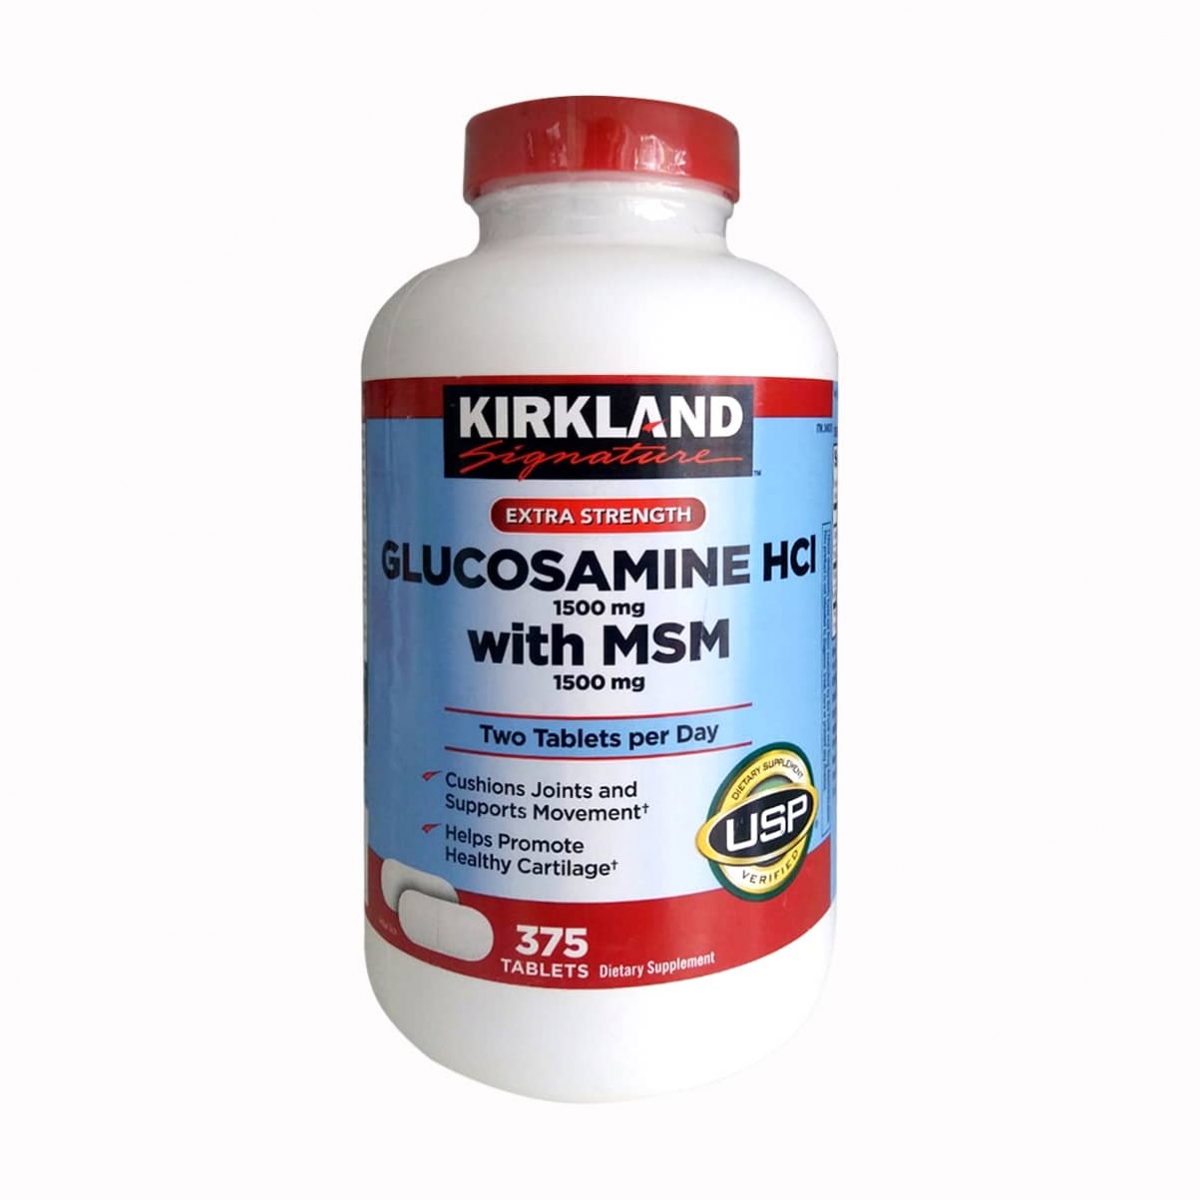 KirkLand Glucosamine HCL 1500mg With MSM 1500mg - 375 Viên